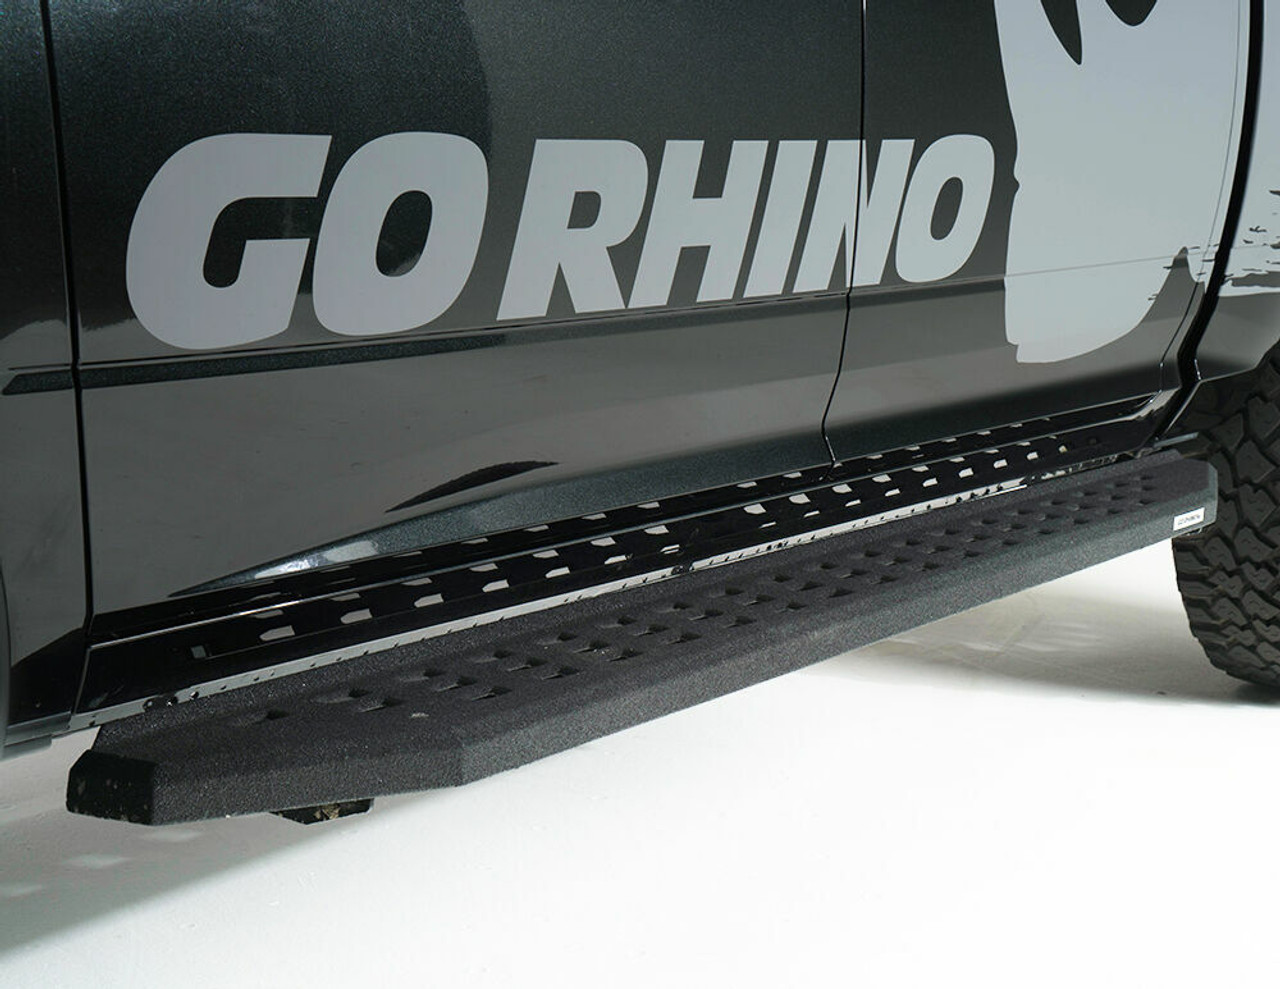 Go Rhino 69405187PC Chevrolet, Silverado 2500HD, 3500HD, 2015 - 2019, RB20 Running boards - Complete Kit: RB20 Running boards + Brackets, Galvanized Steel, Textured black, 69400087PC RB20 + 6940515 RB Brackets, Diesel only